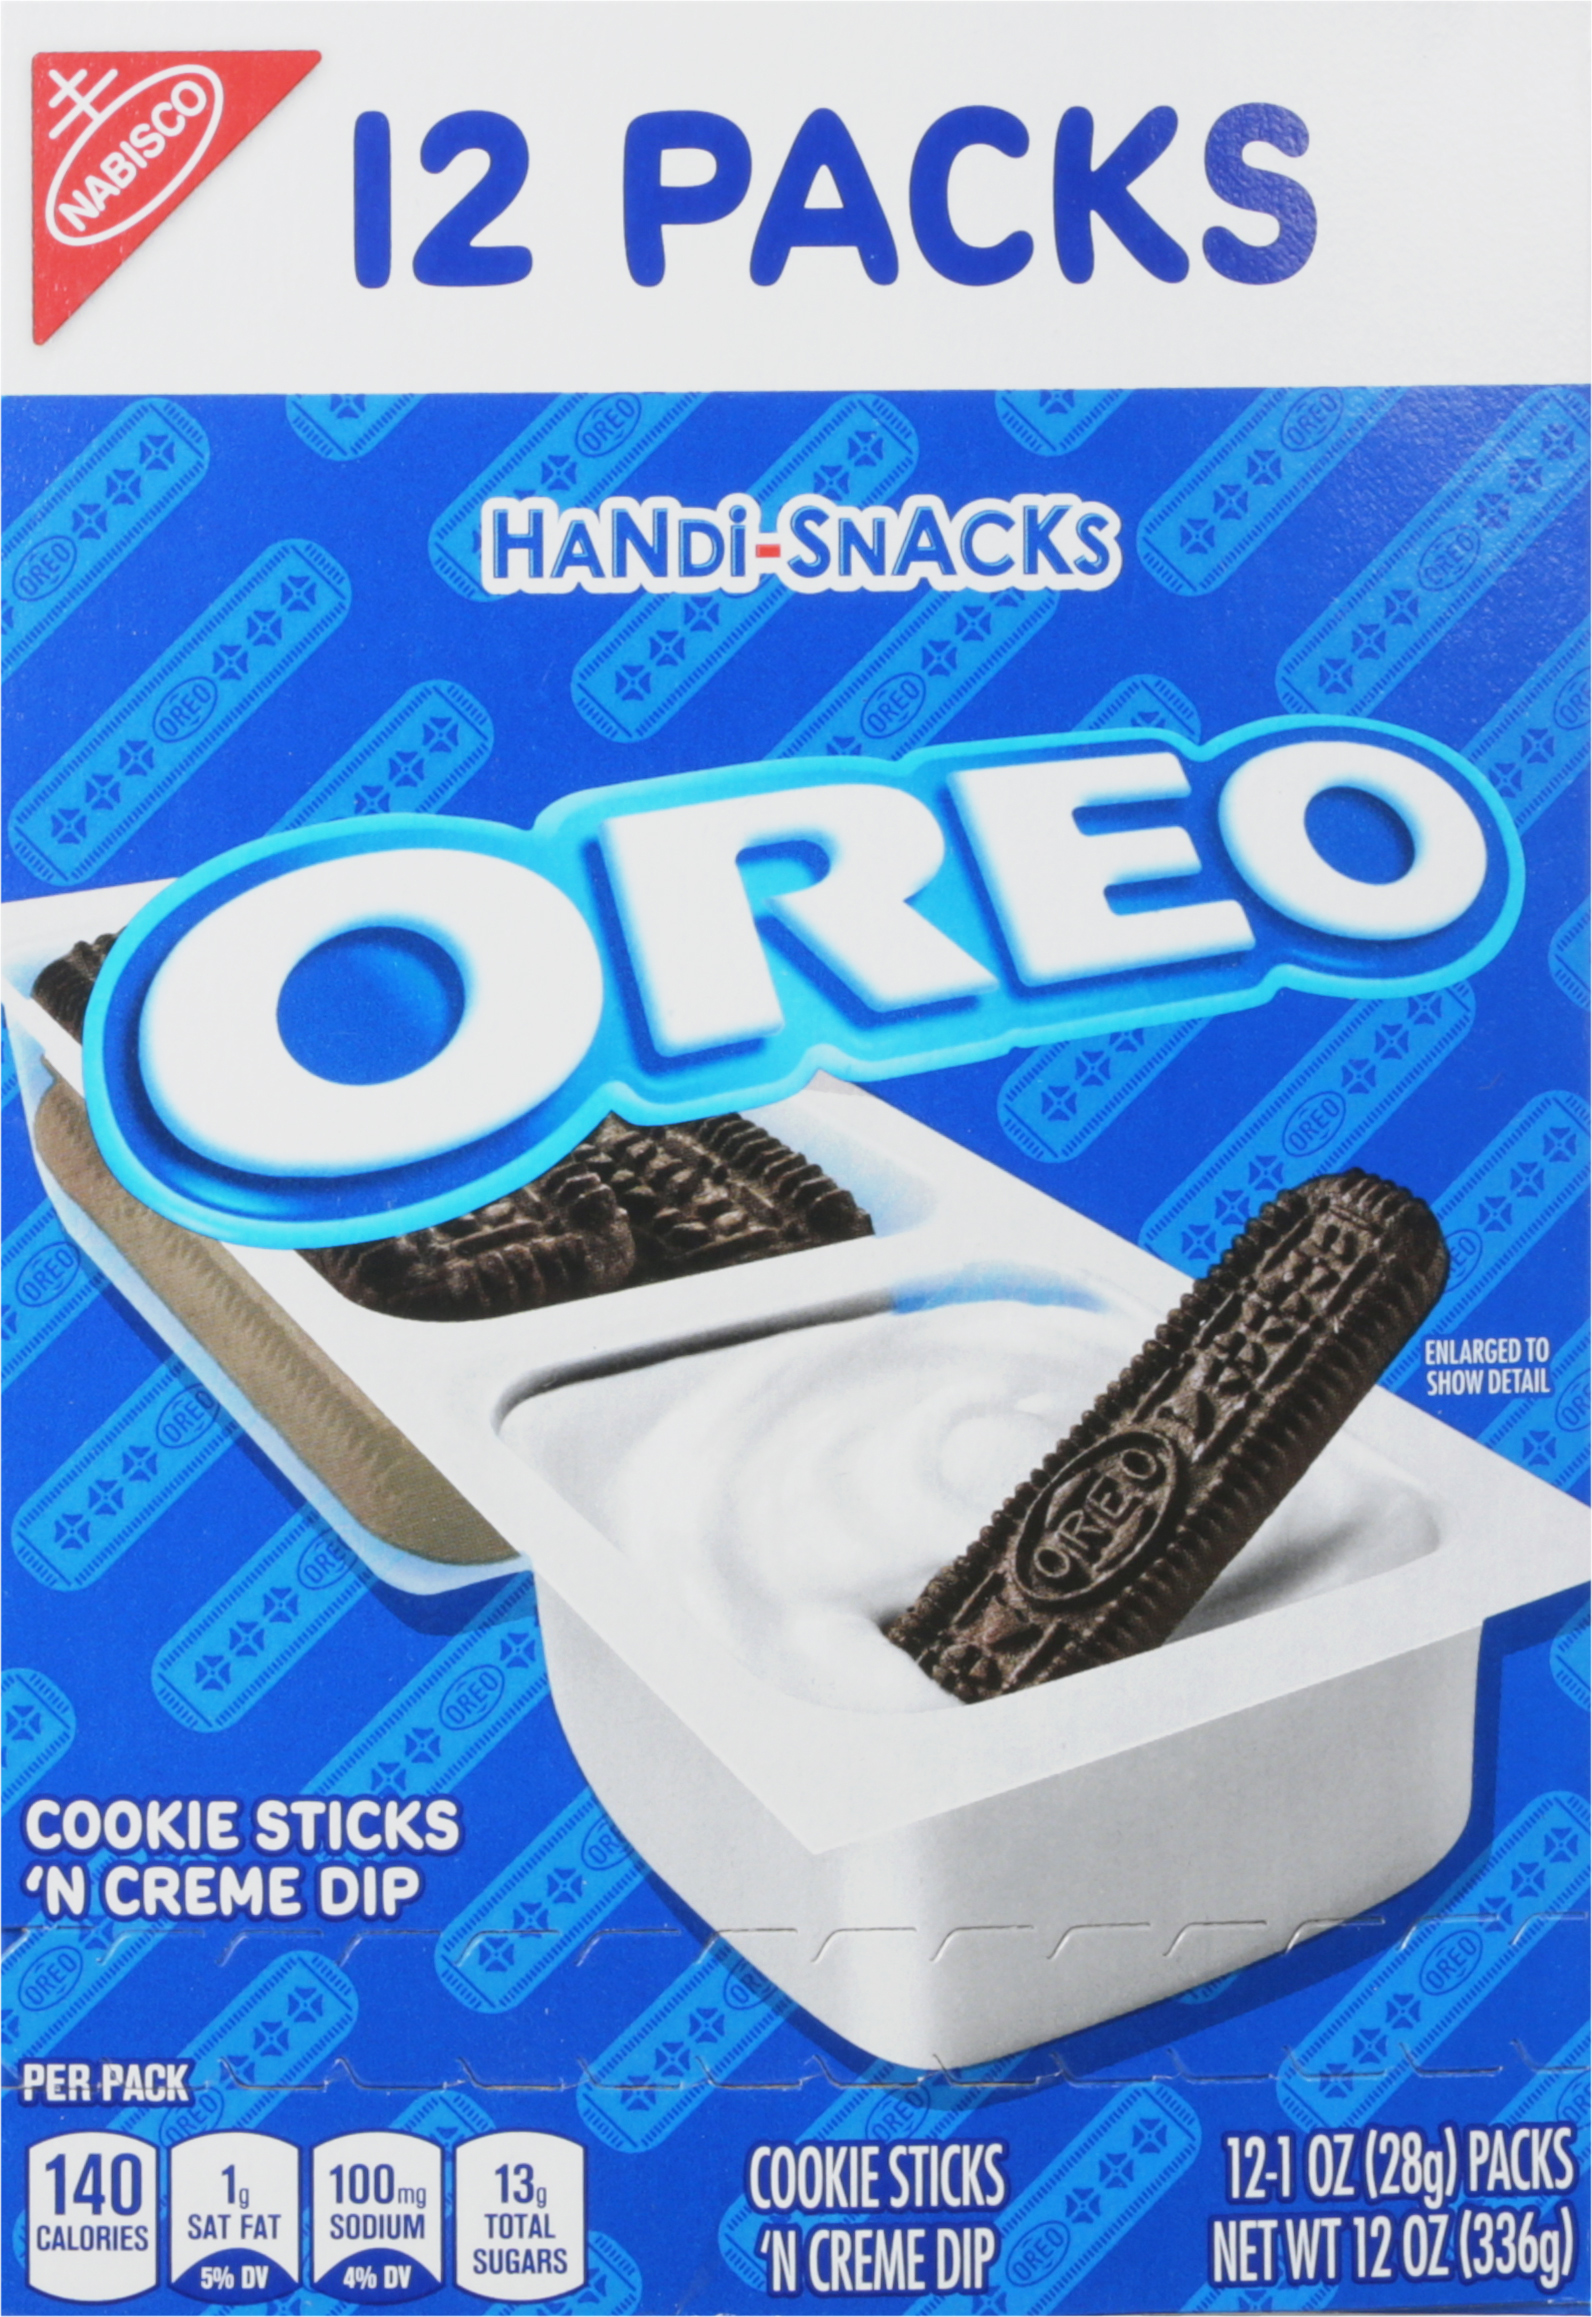 Cookie Sticks 'N Creme Dip, 12 Packs image